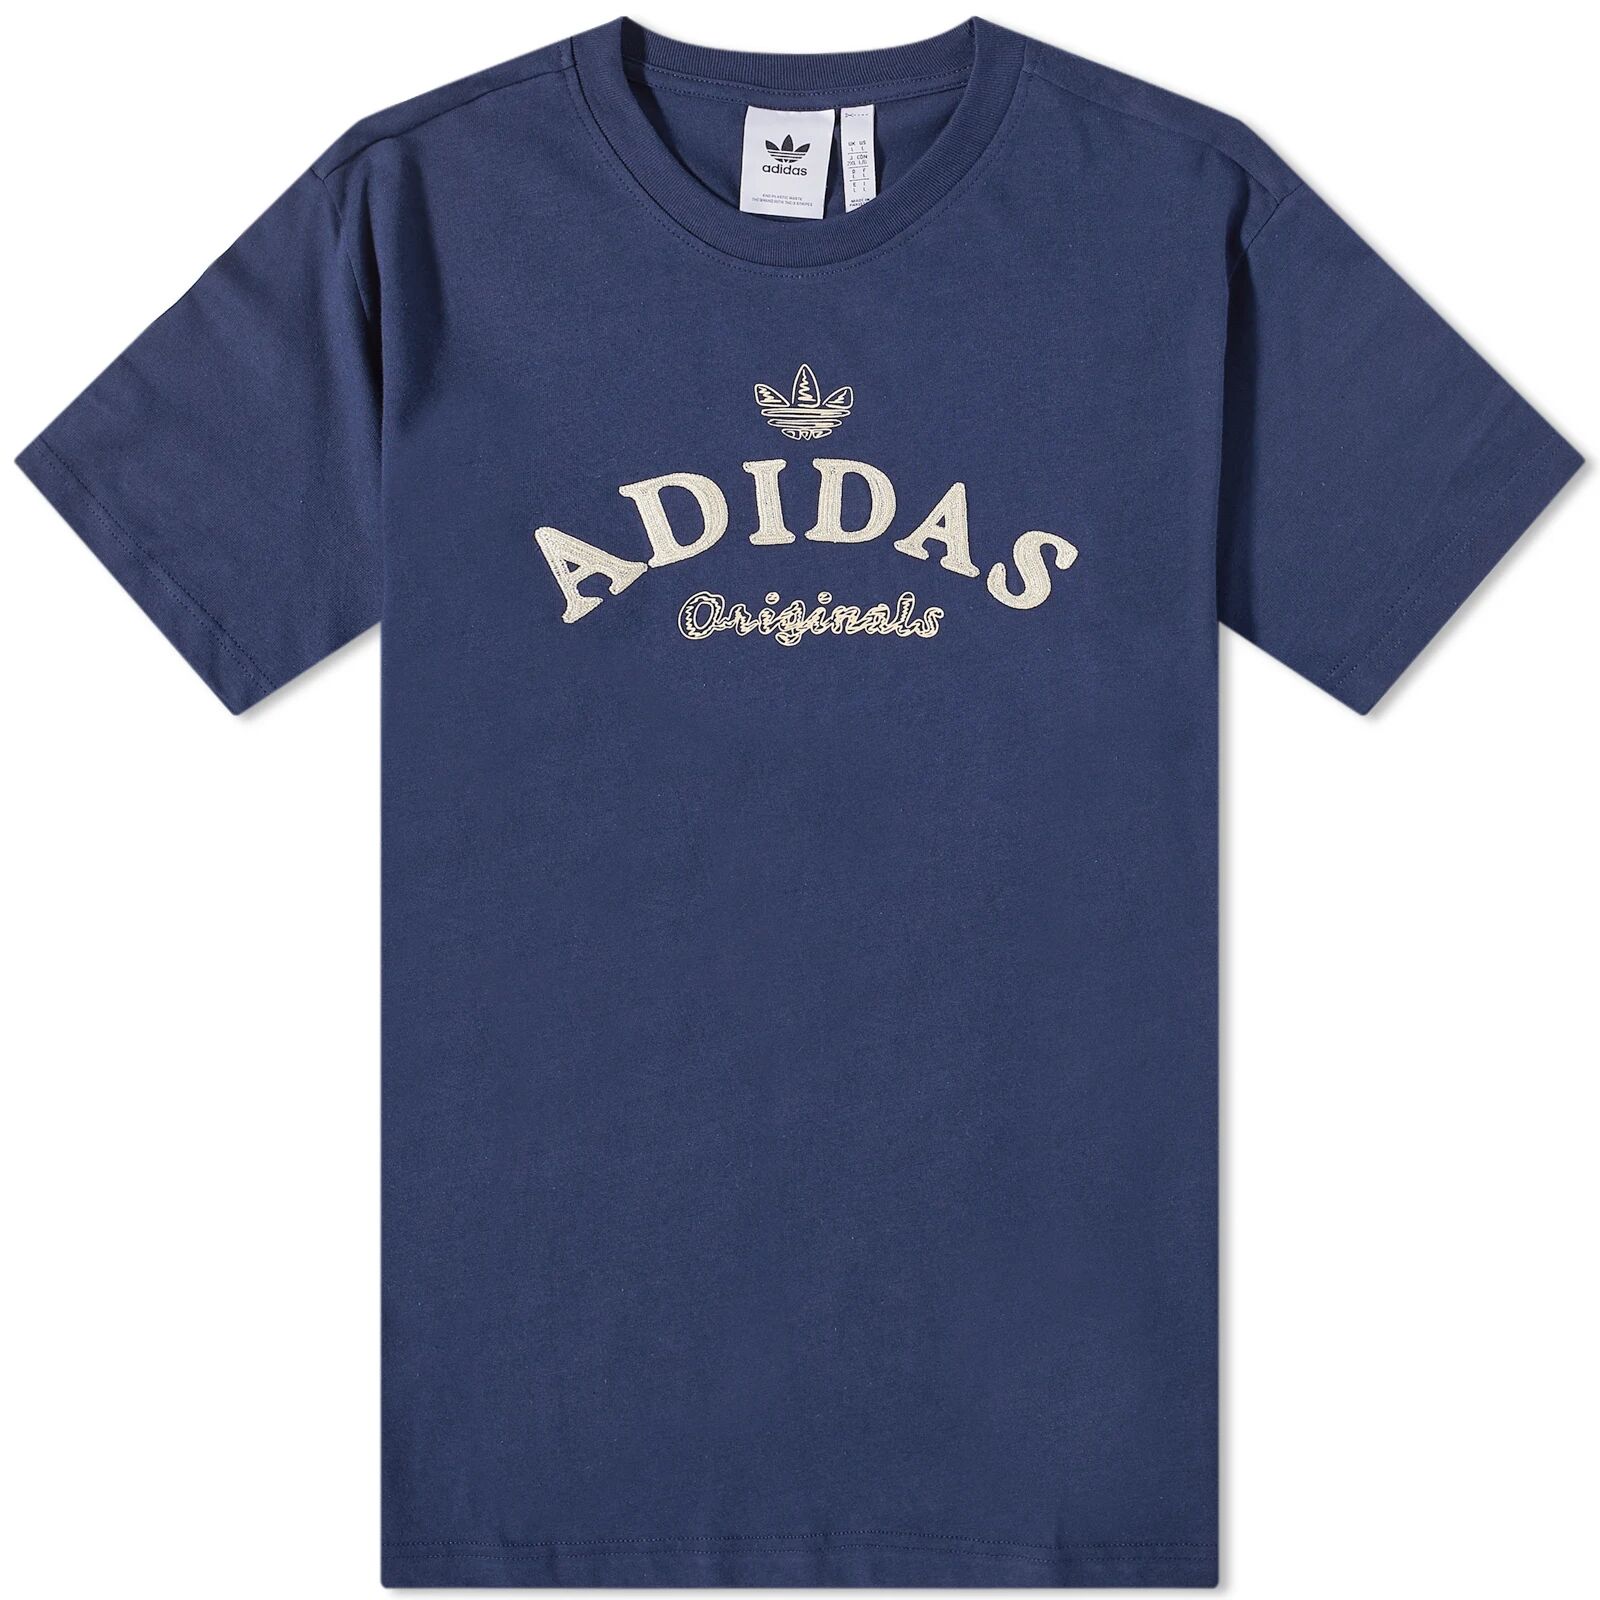 Adidas Men's Graphic T-Shirt in Night Indigo, Size X-Small